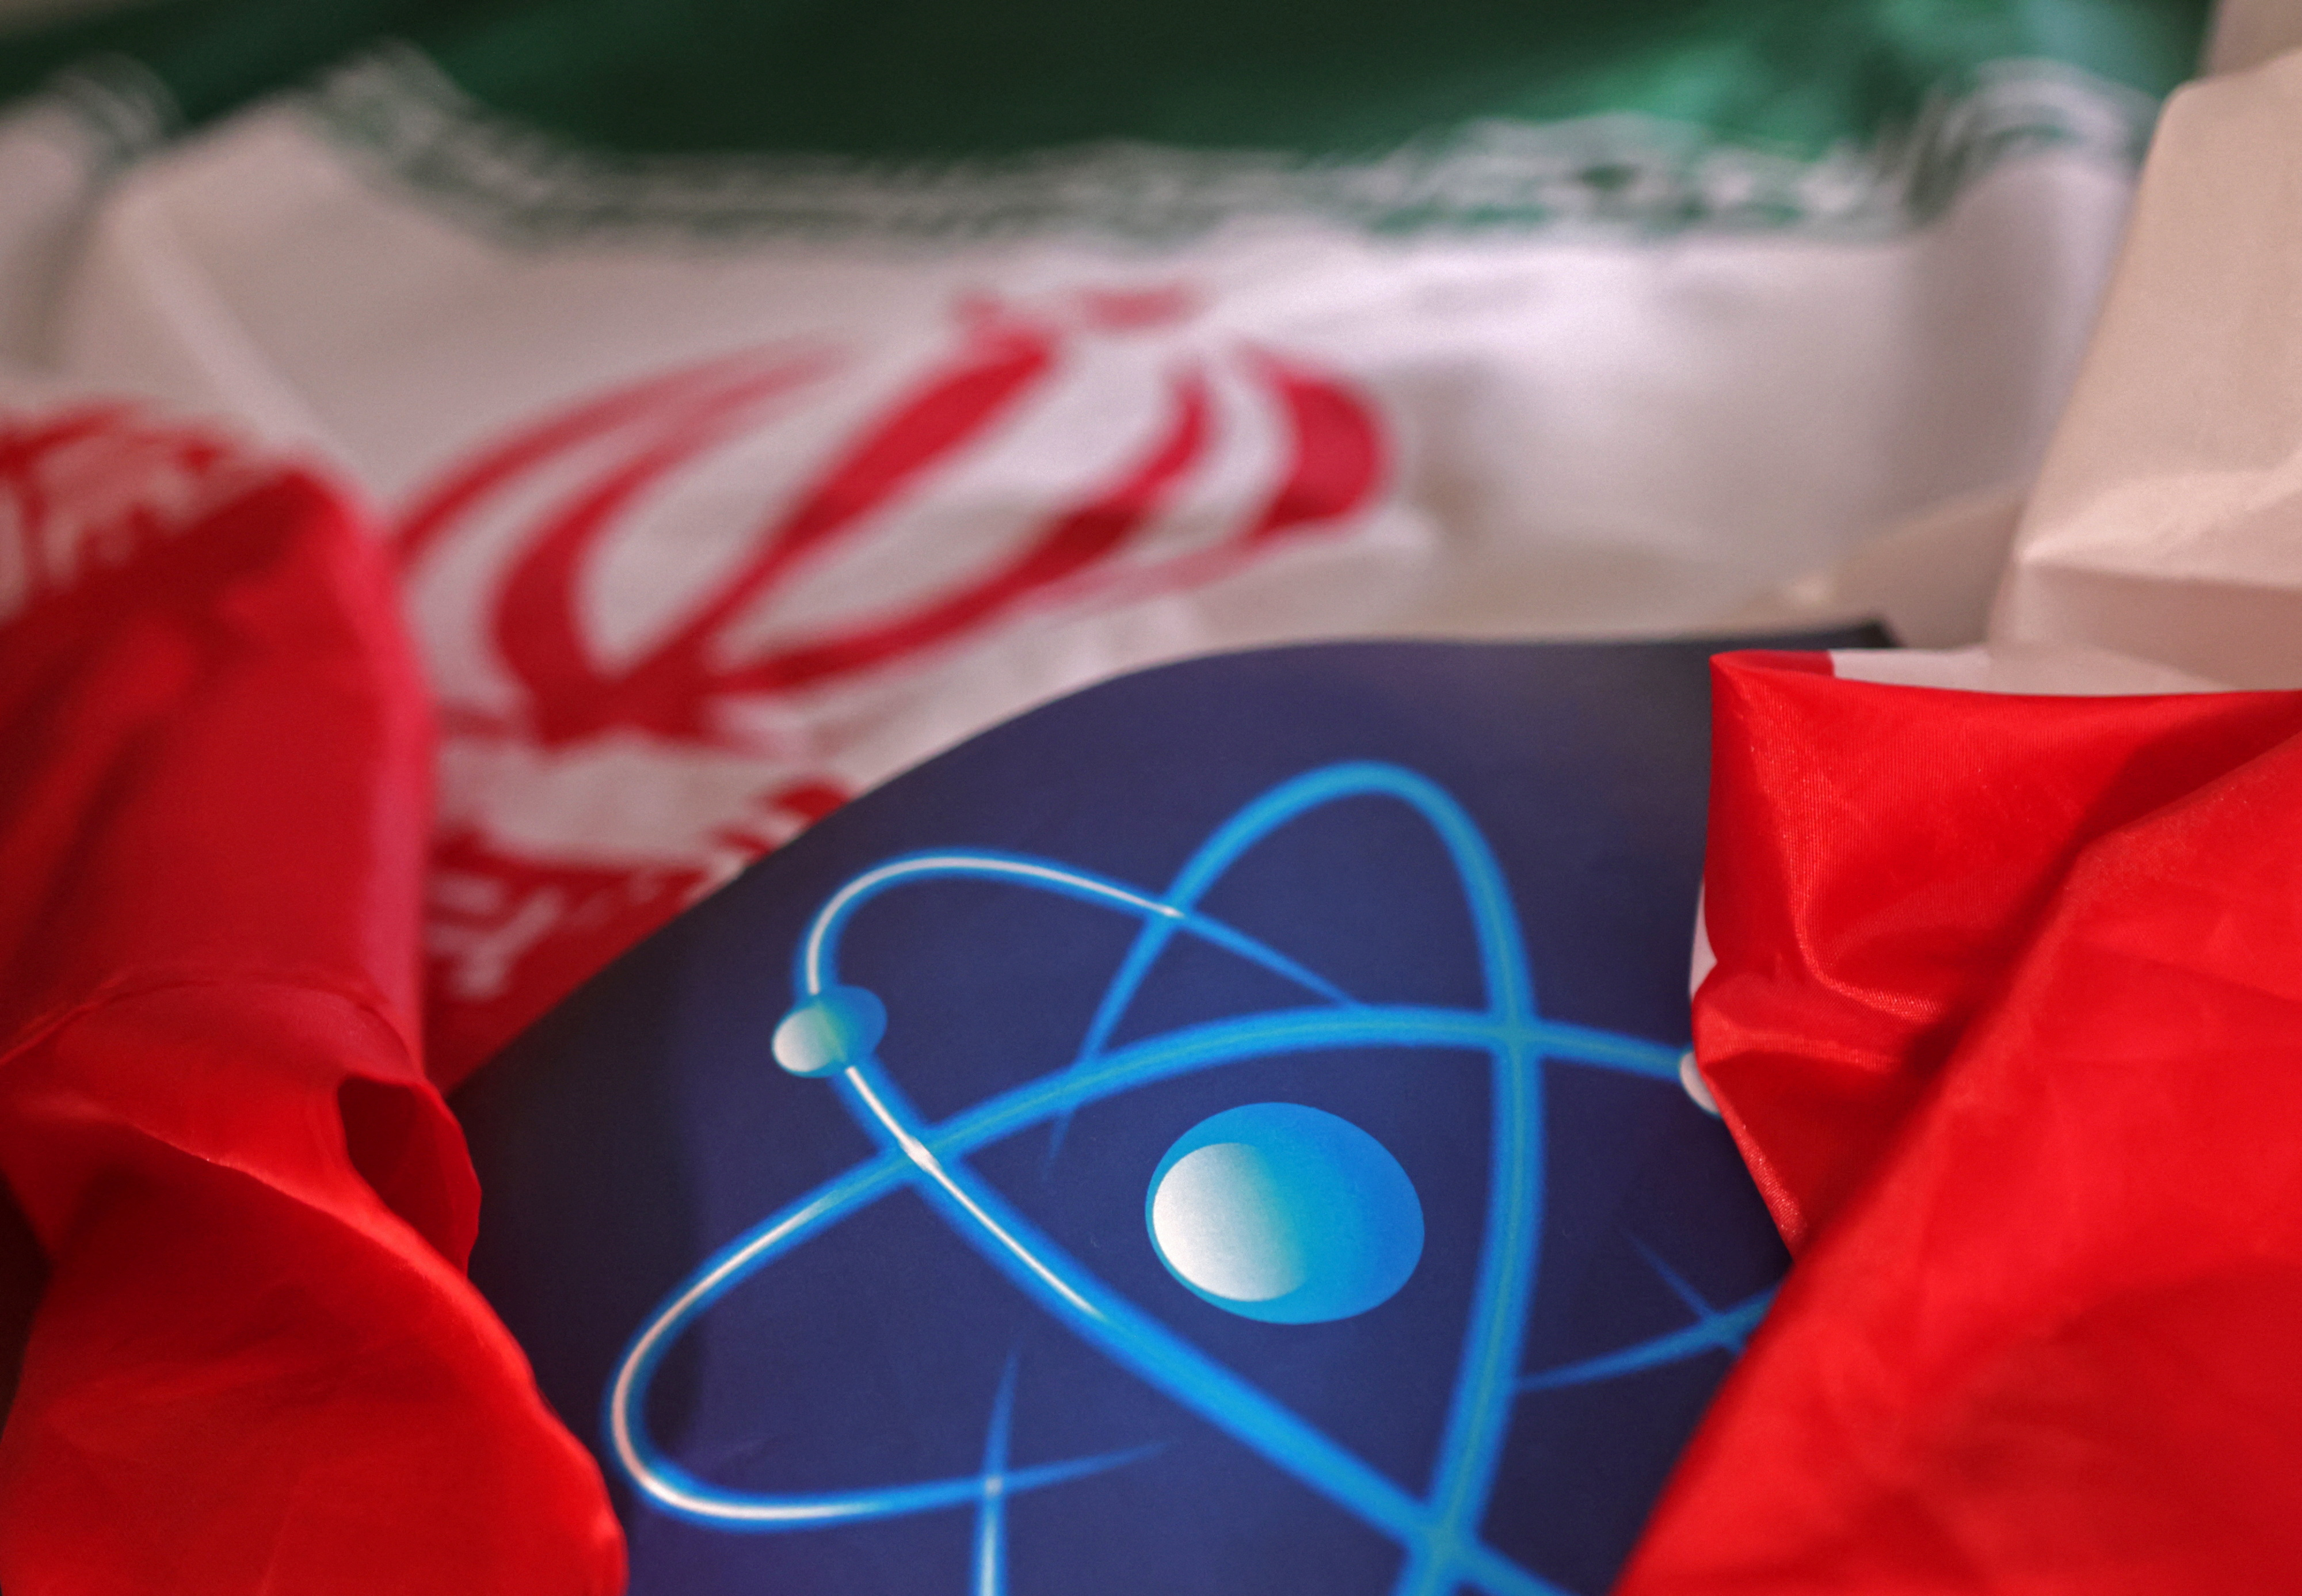 Illustration shows atomic symbol and Iranian flag